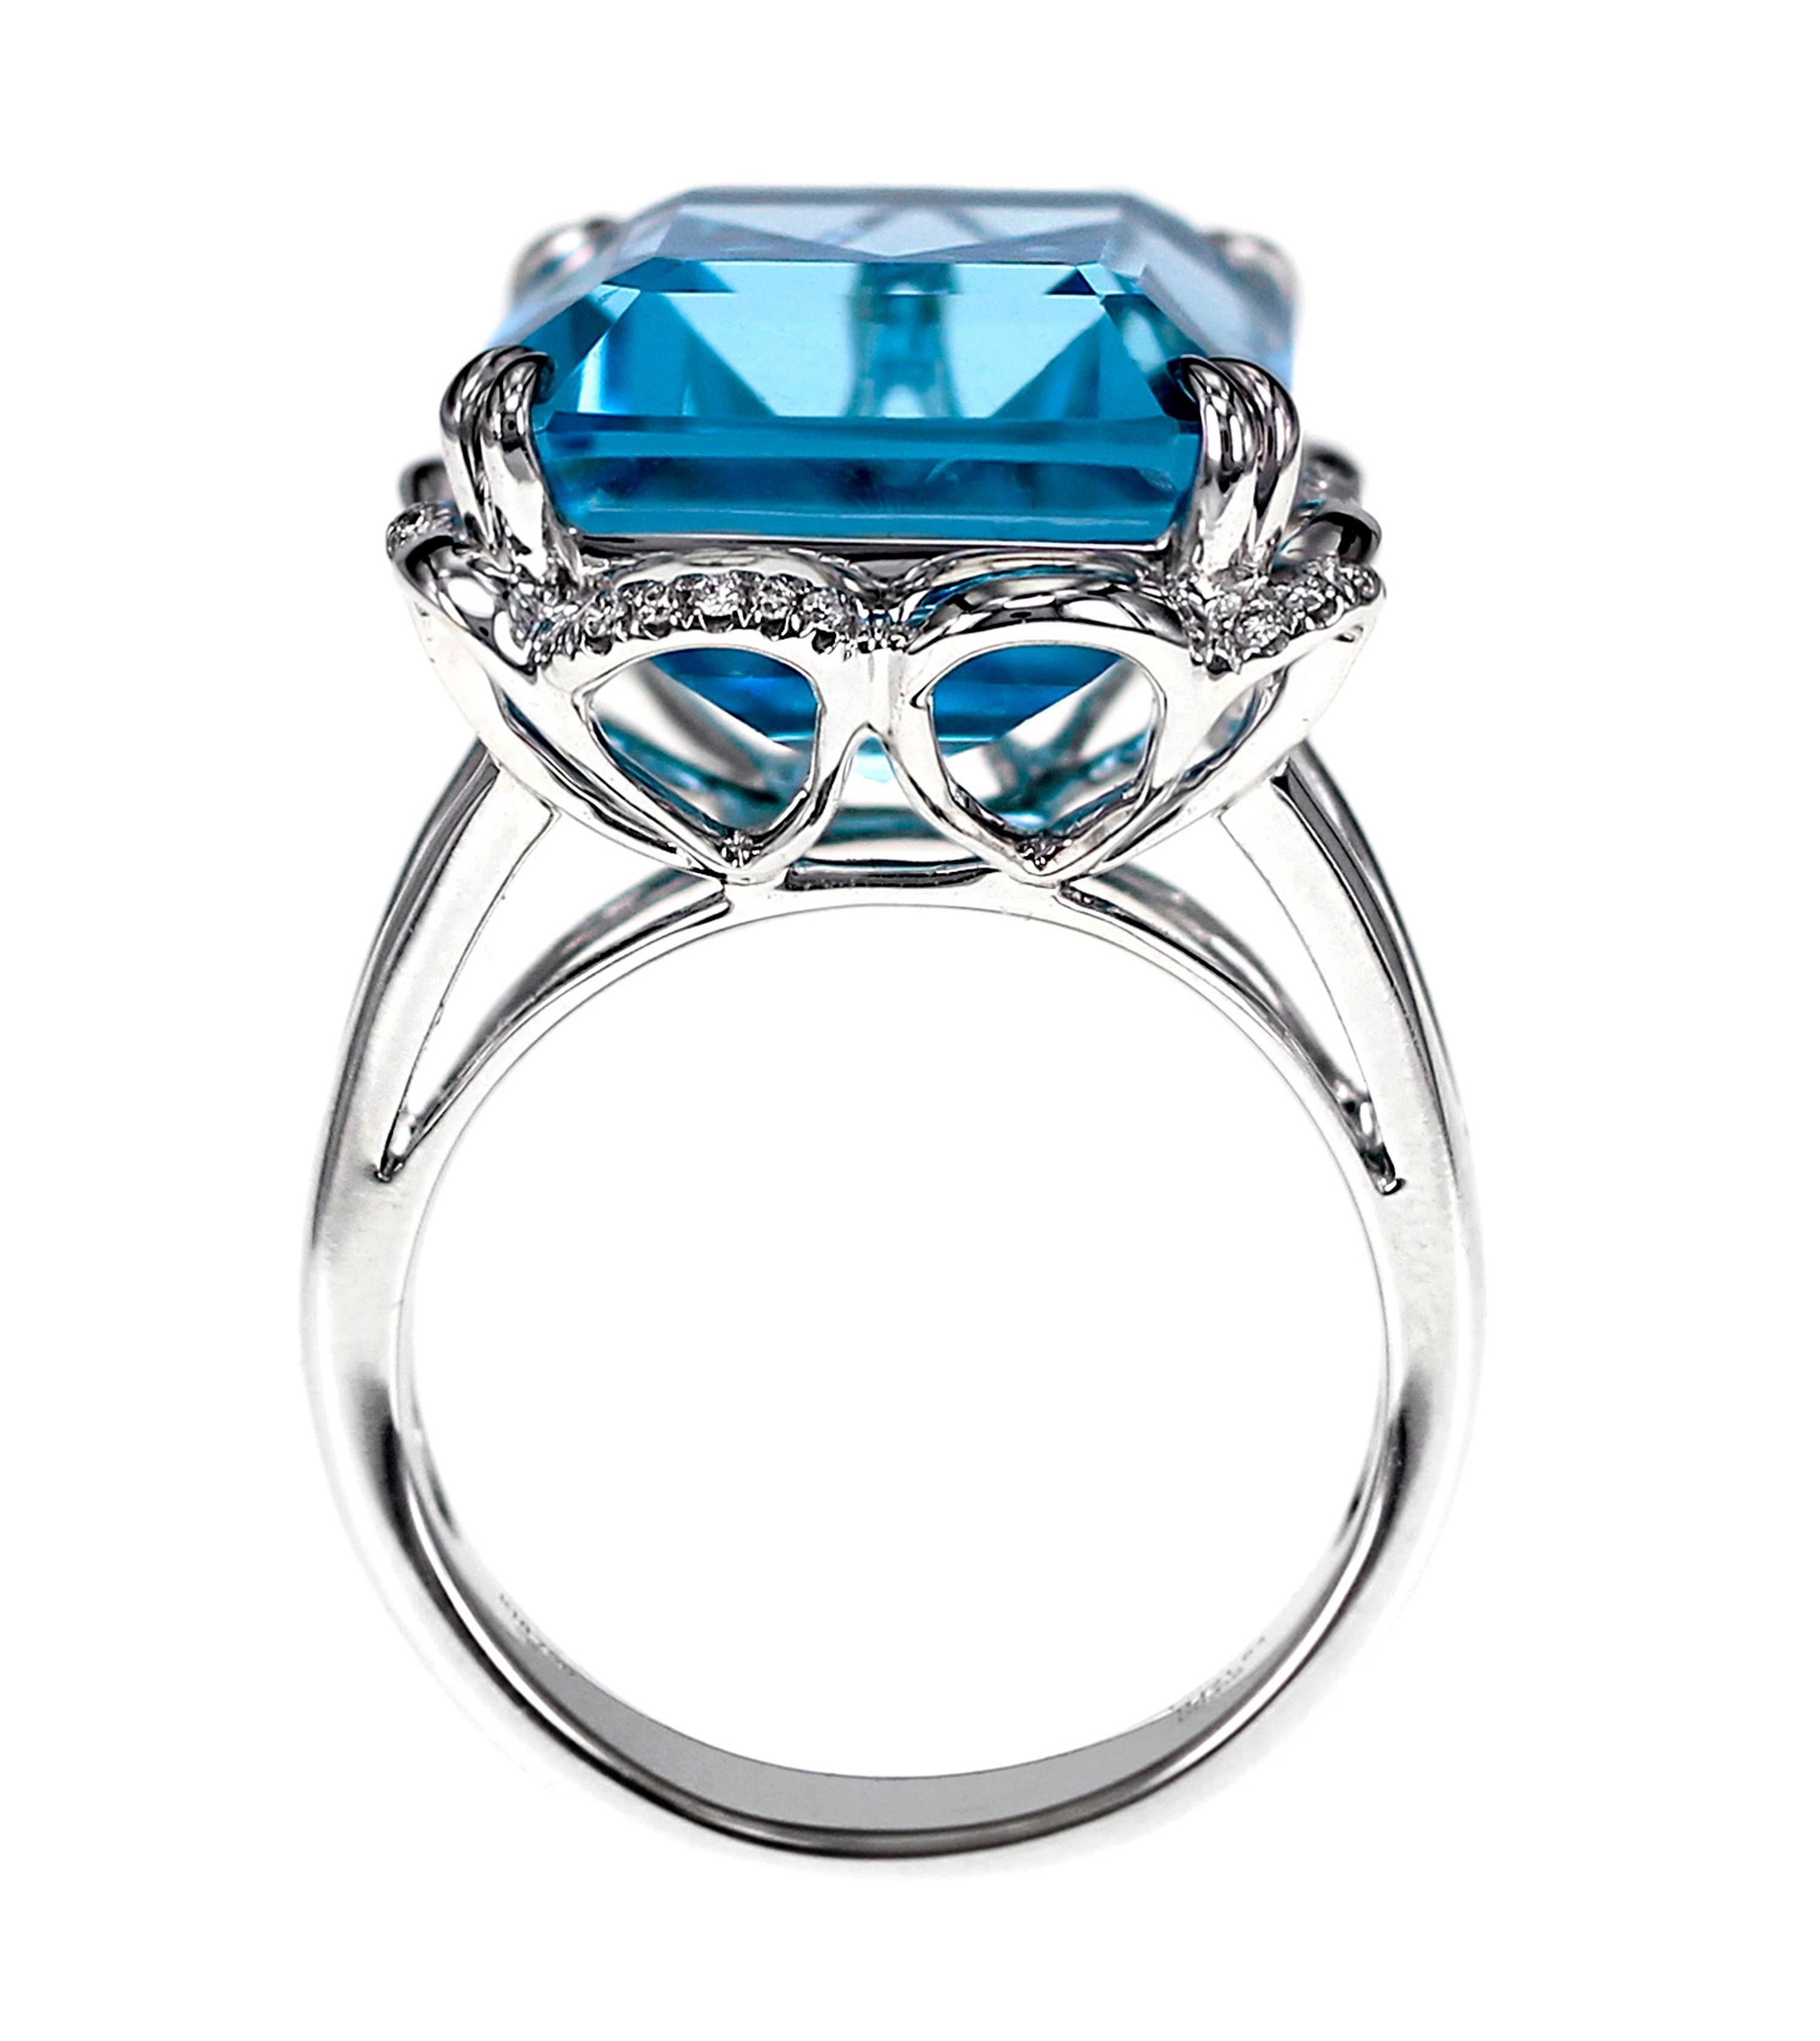 Emerald Cut 21.64 Carat London Blue Topaz and Diamond Ring